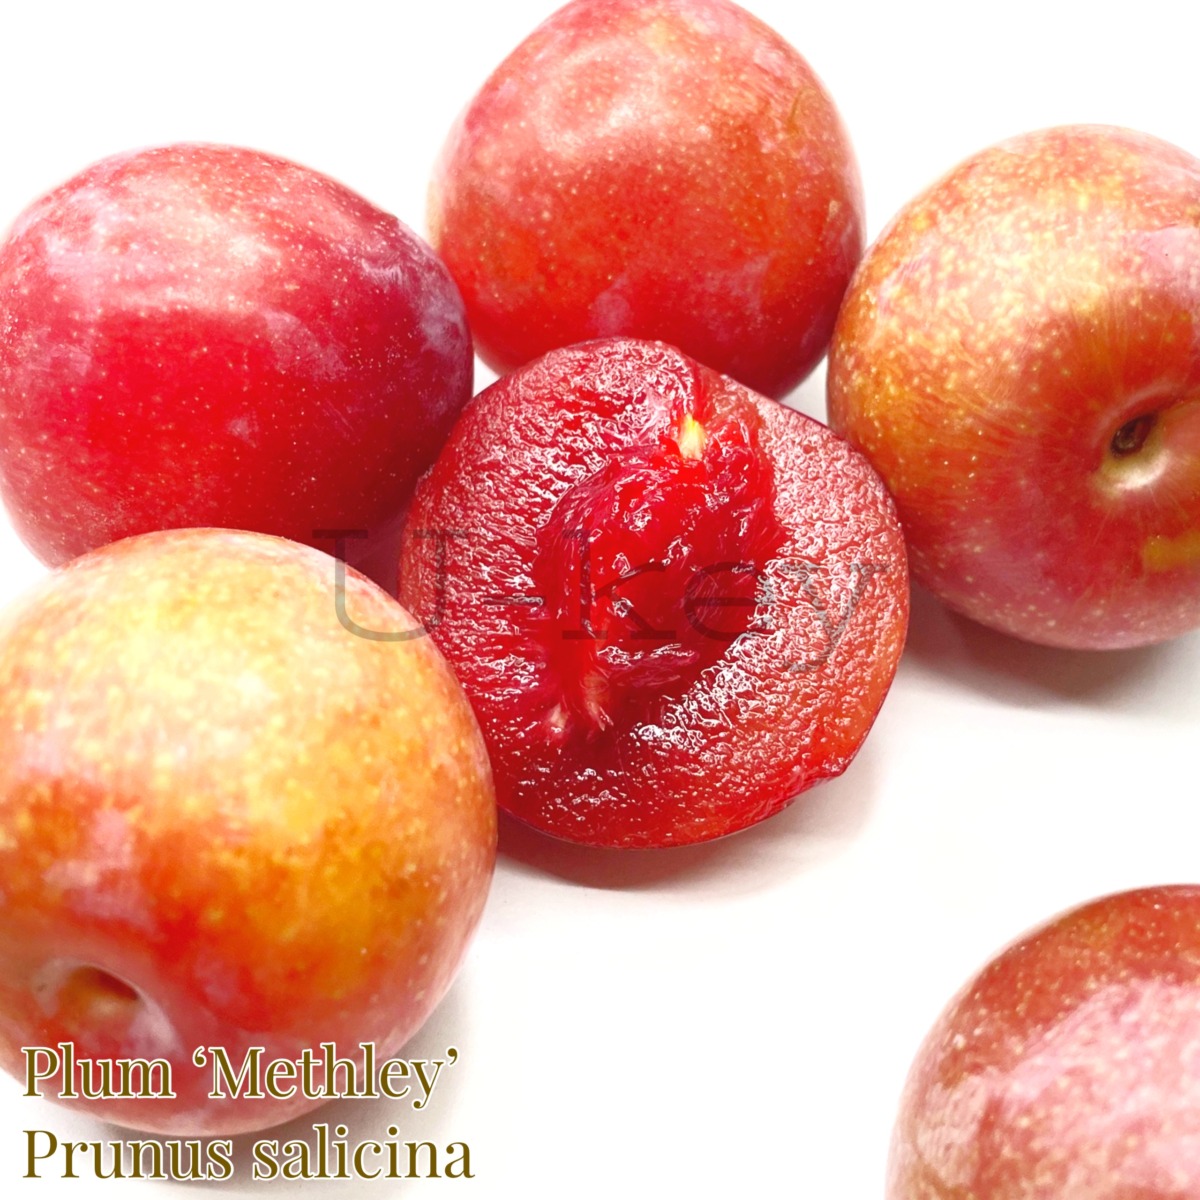 Plum ‘Methley’,Prunus salicina